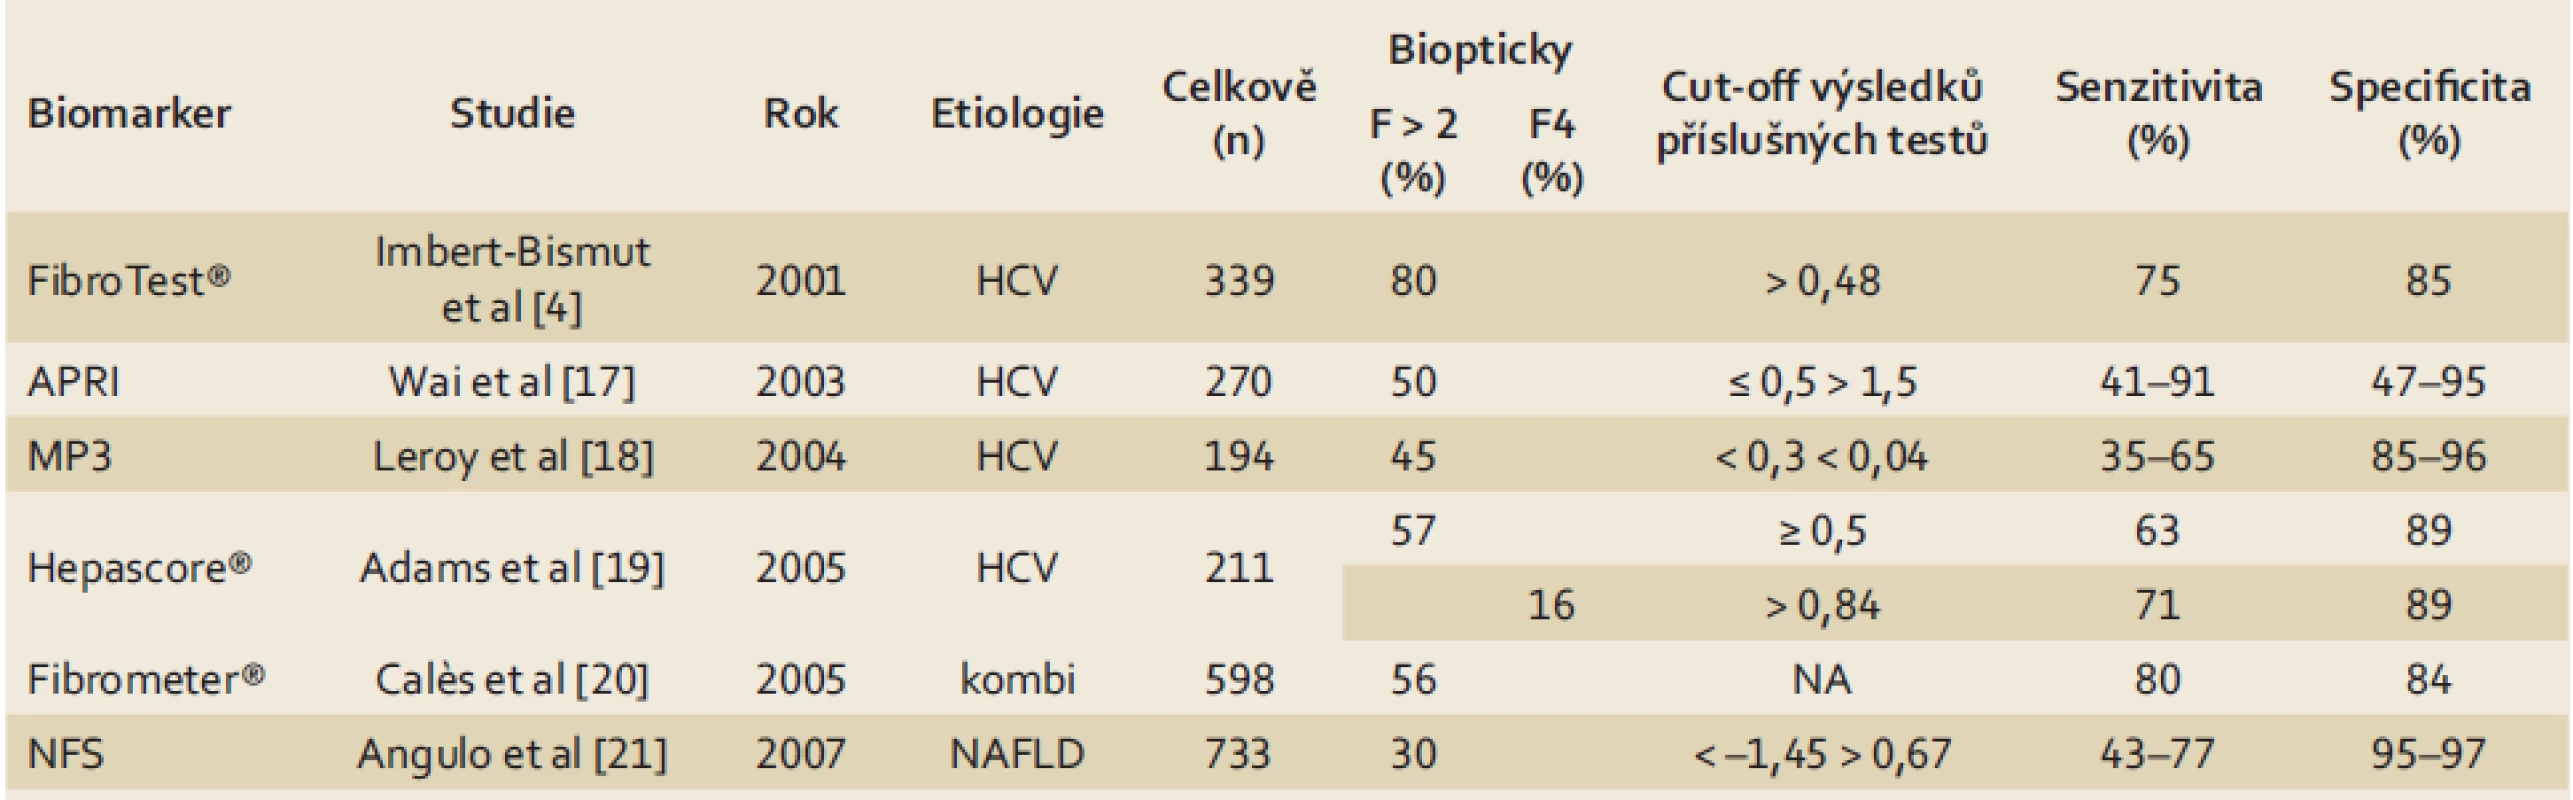 Senzitivita a specificita biomarkerů pro významnou fibrózu a cirhózu dle [7].
Tab. 2. Sensitivity and specificity of biomarkers for significant fibrosis and cirrhosis according to [7].